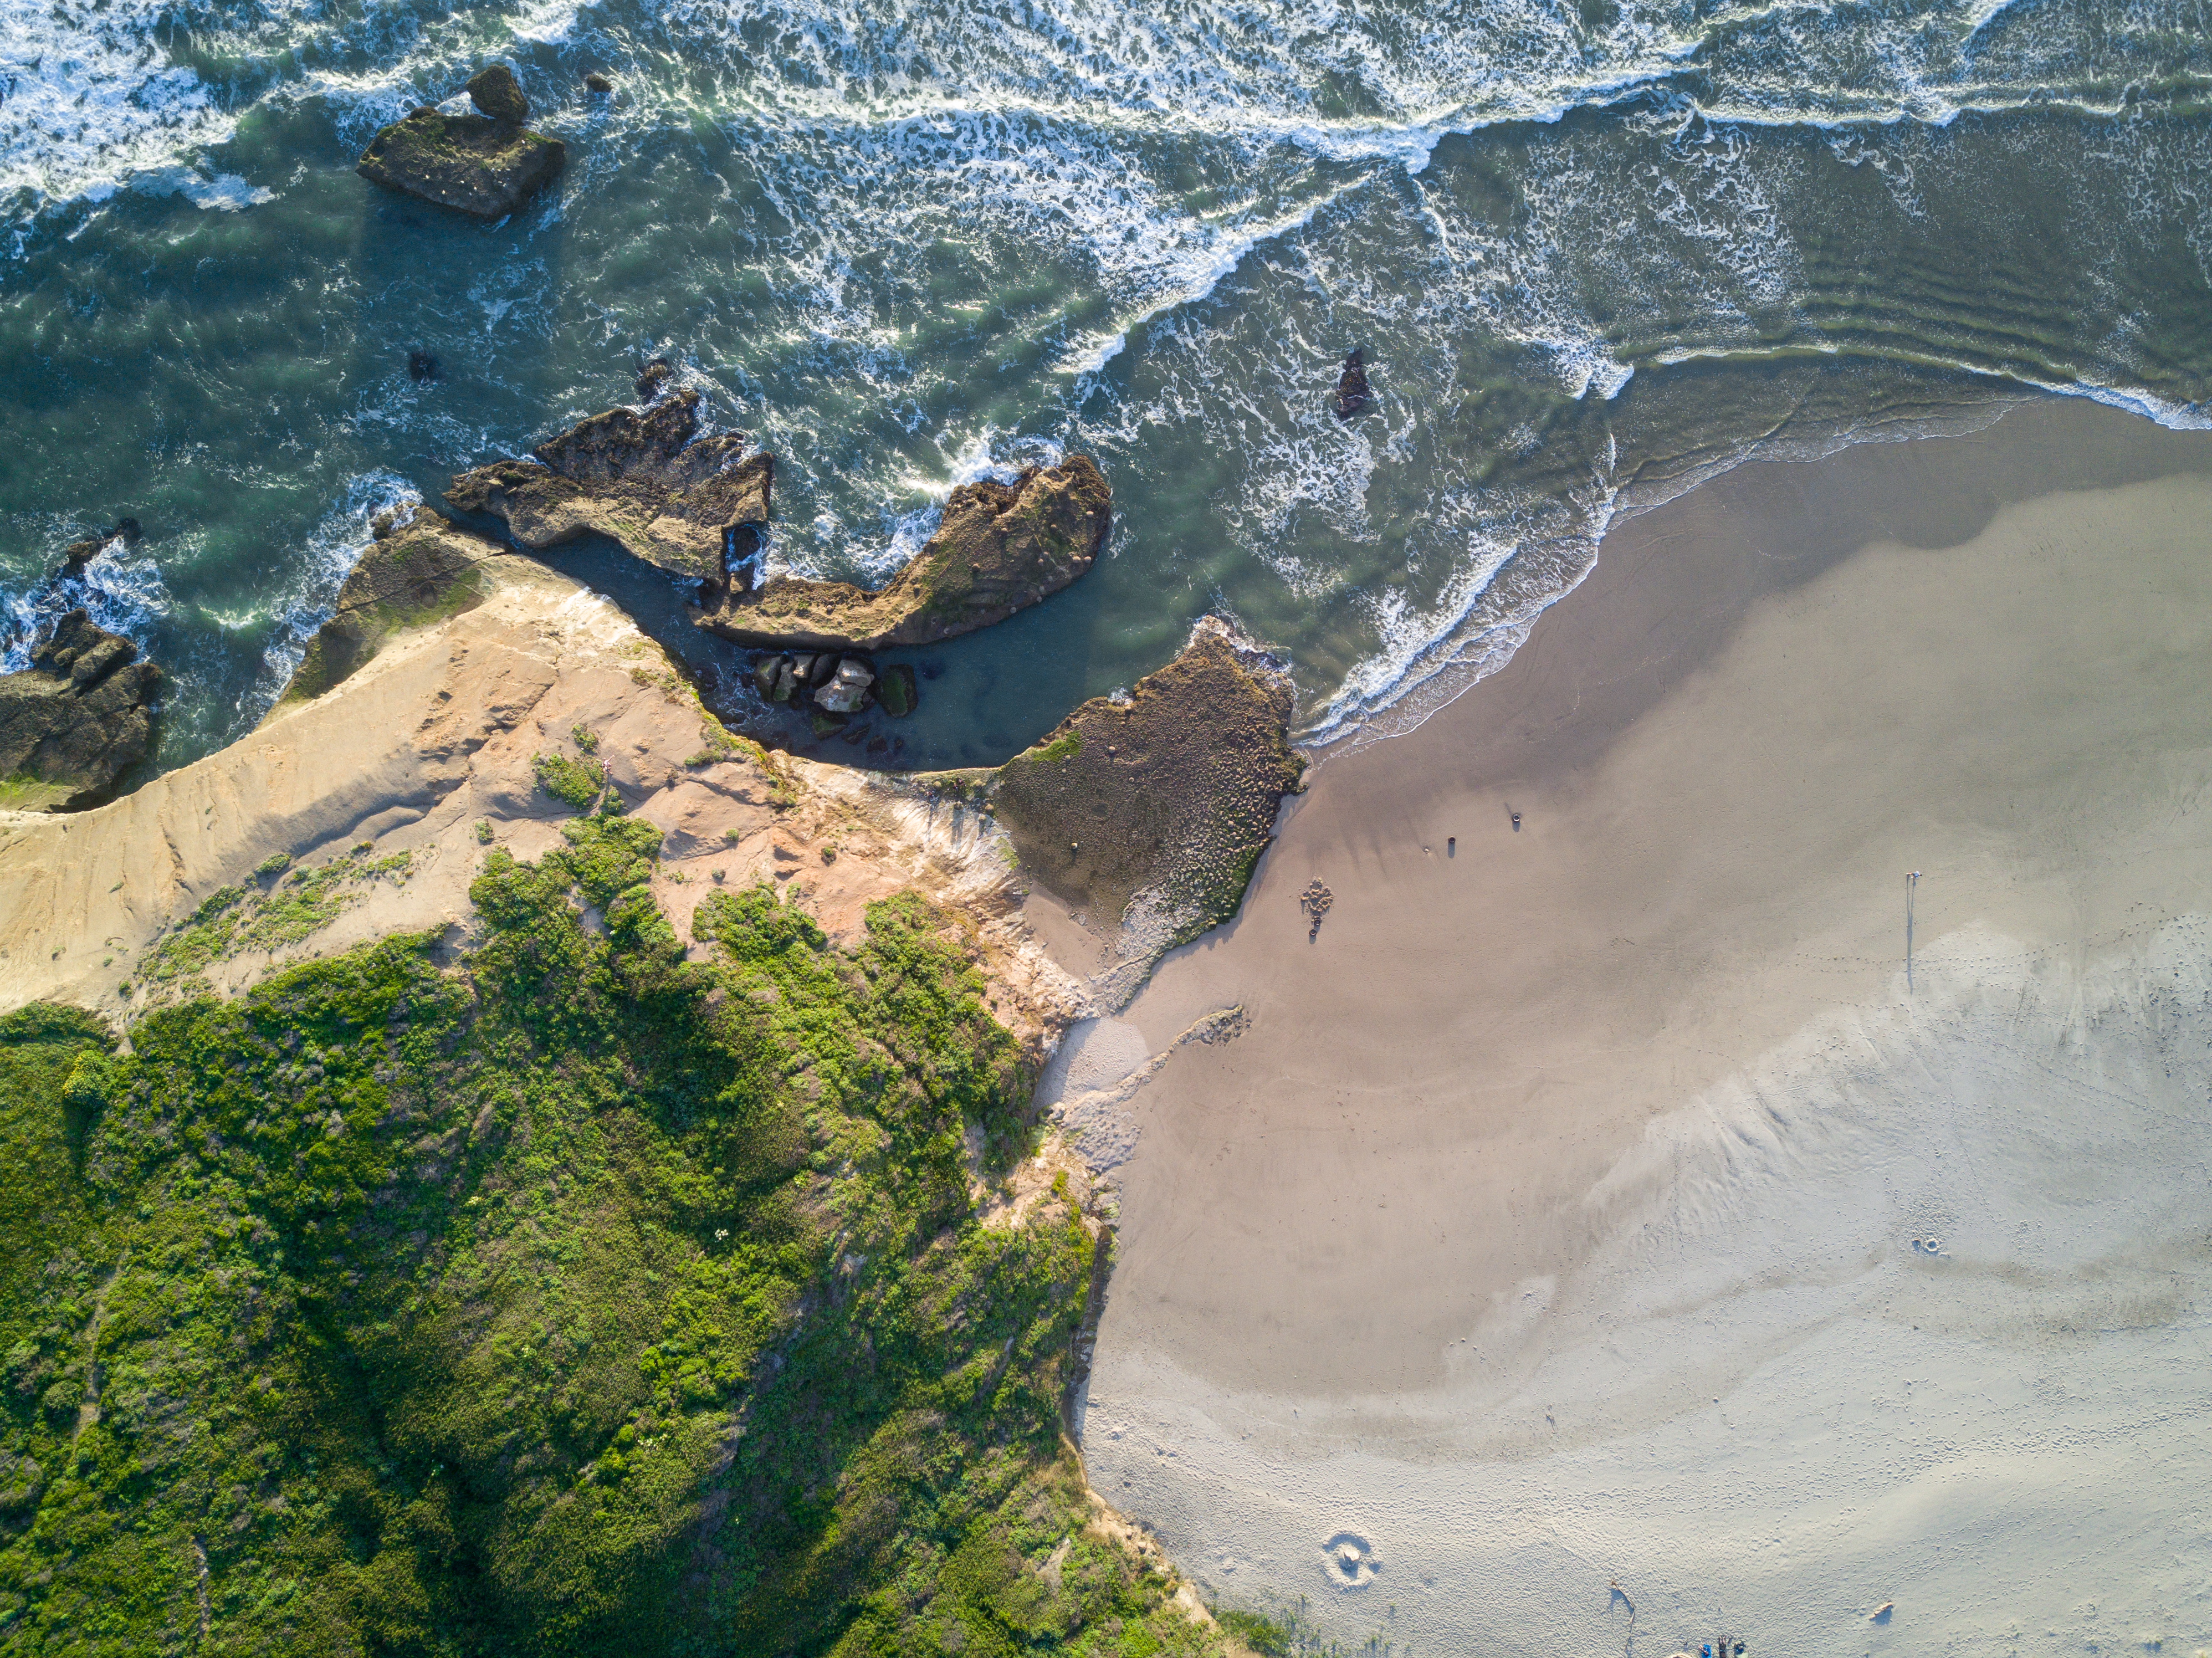 108803 descargar imagen vista desde arriba, naturaleza, agua, mar, playa, roca, orilla, banco: fondos de pantalla y protectores de pantalla gratis